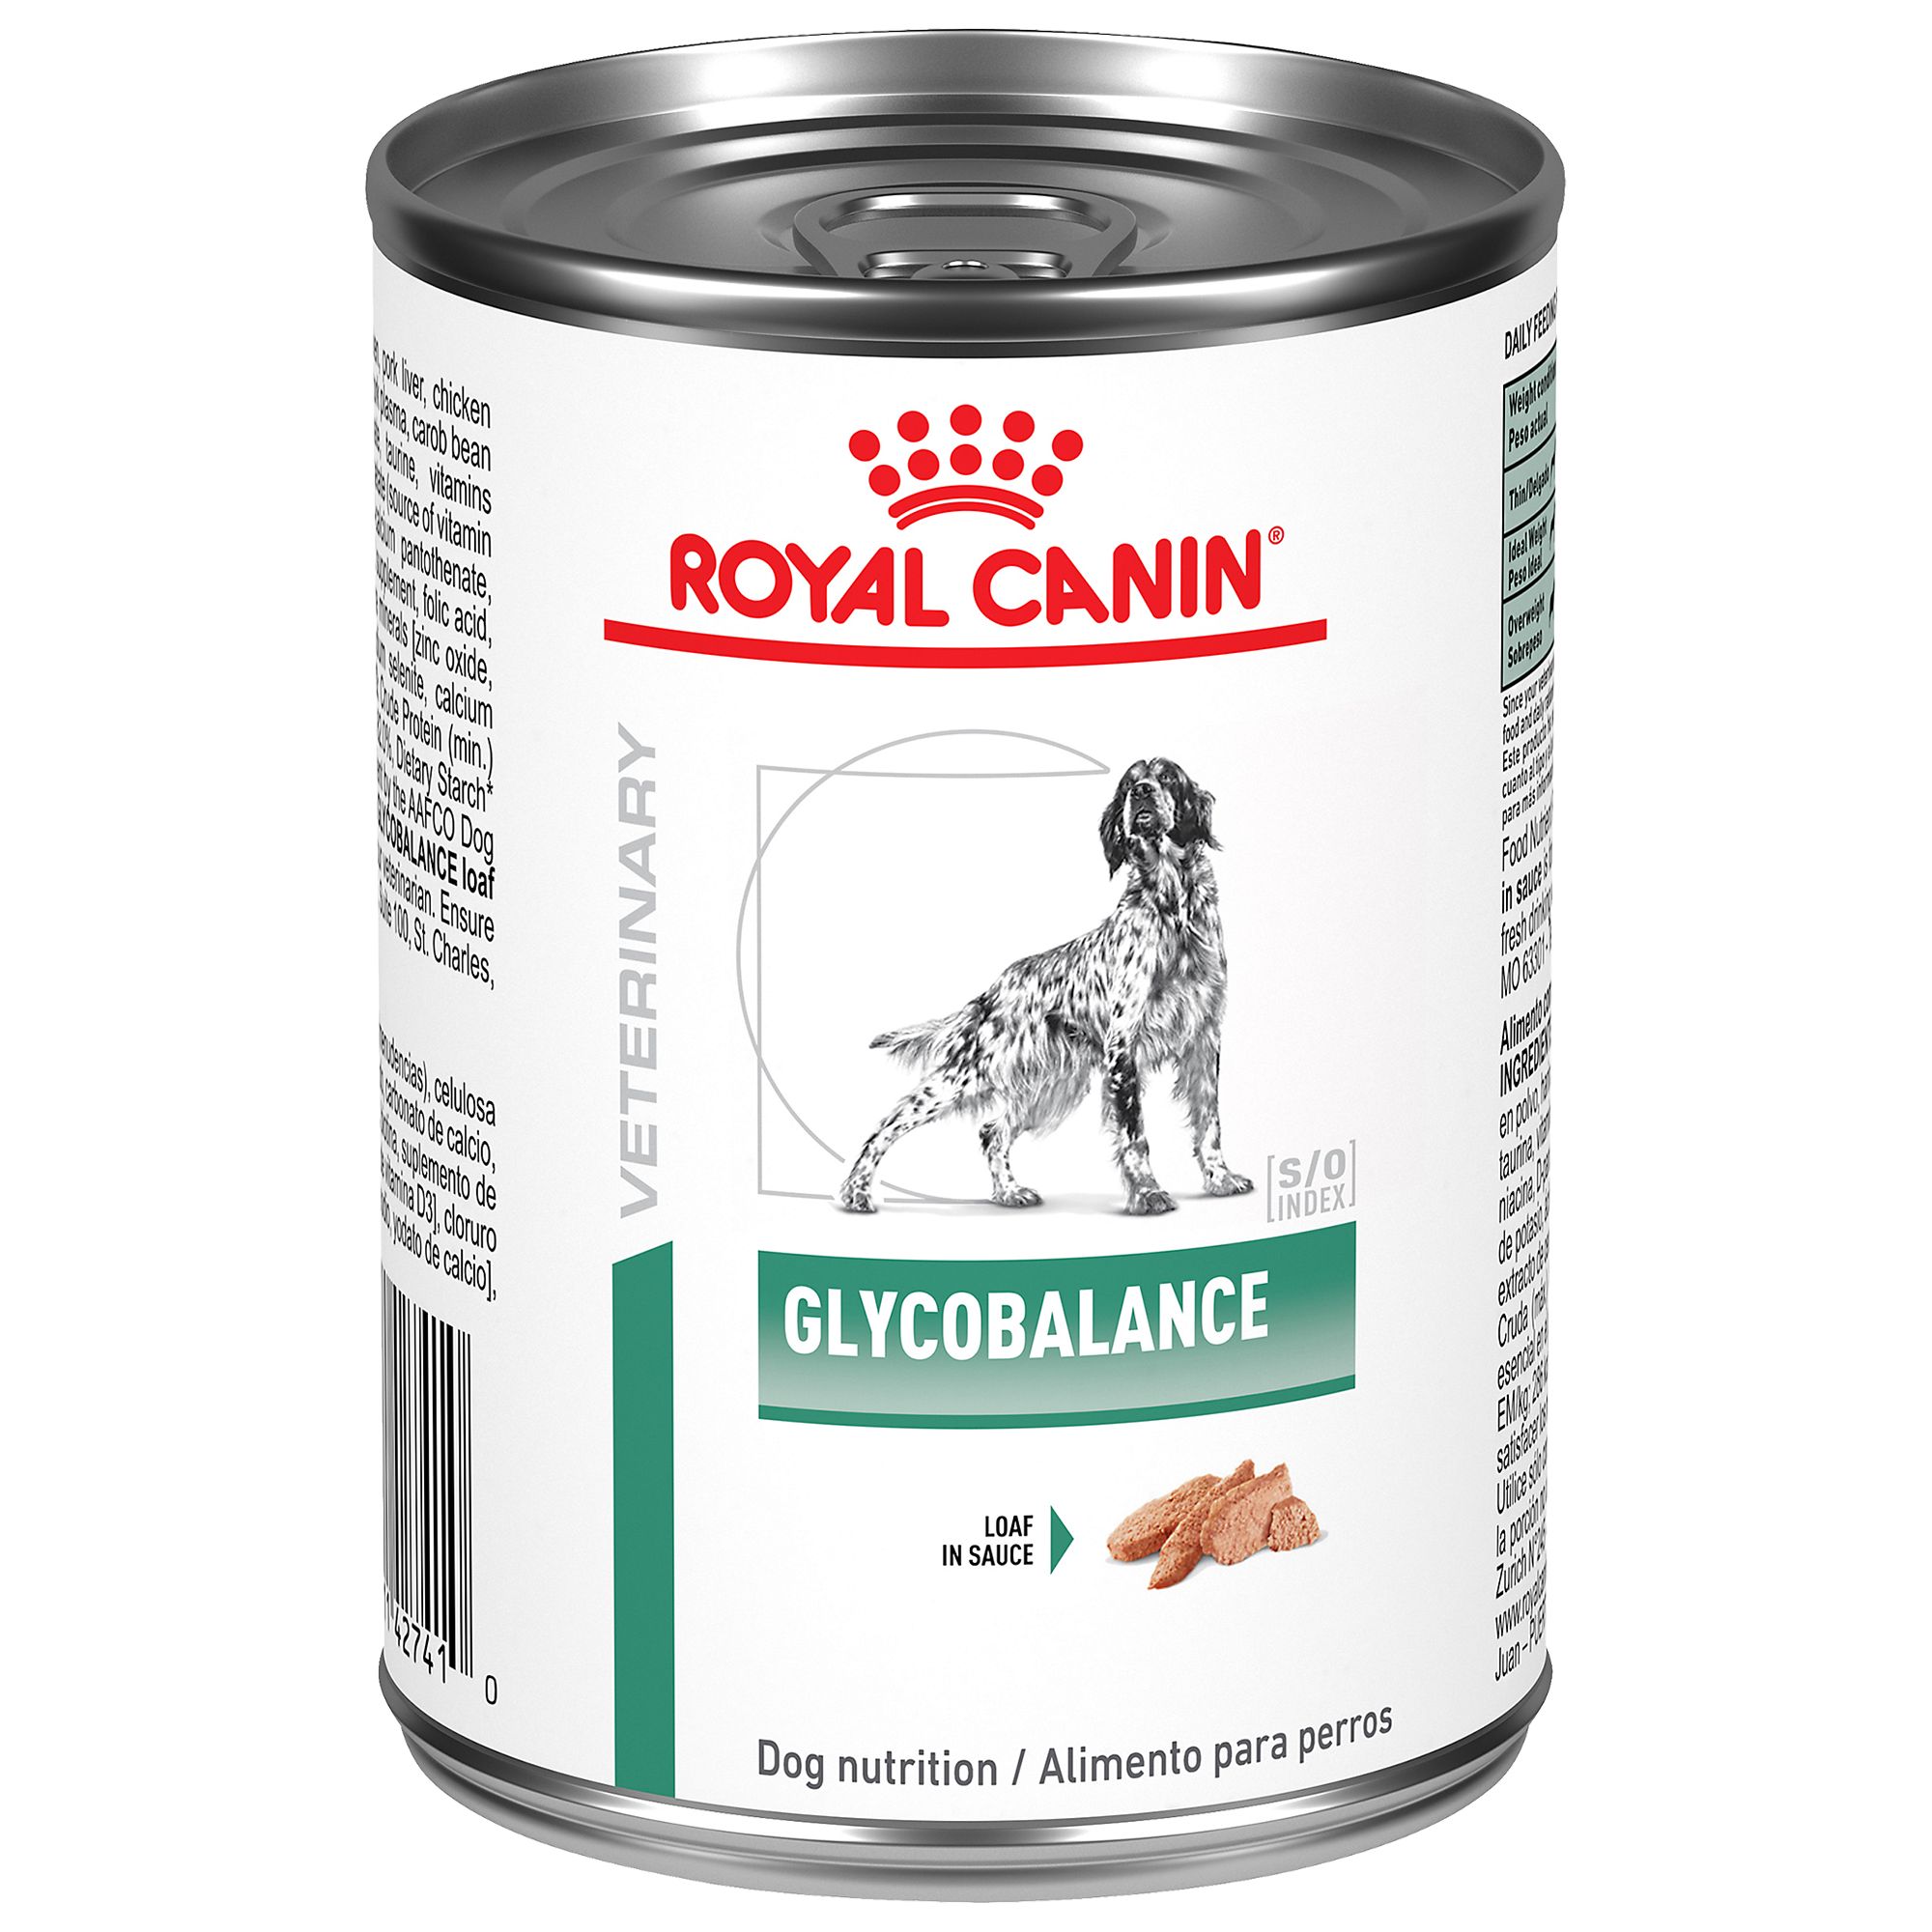 royal canin glycobalance carbs